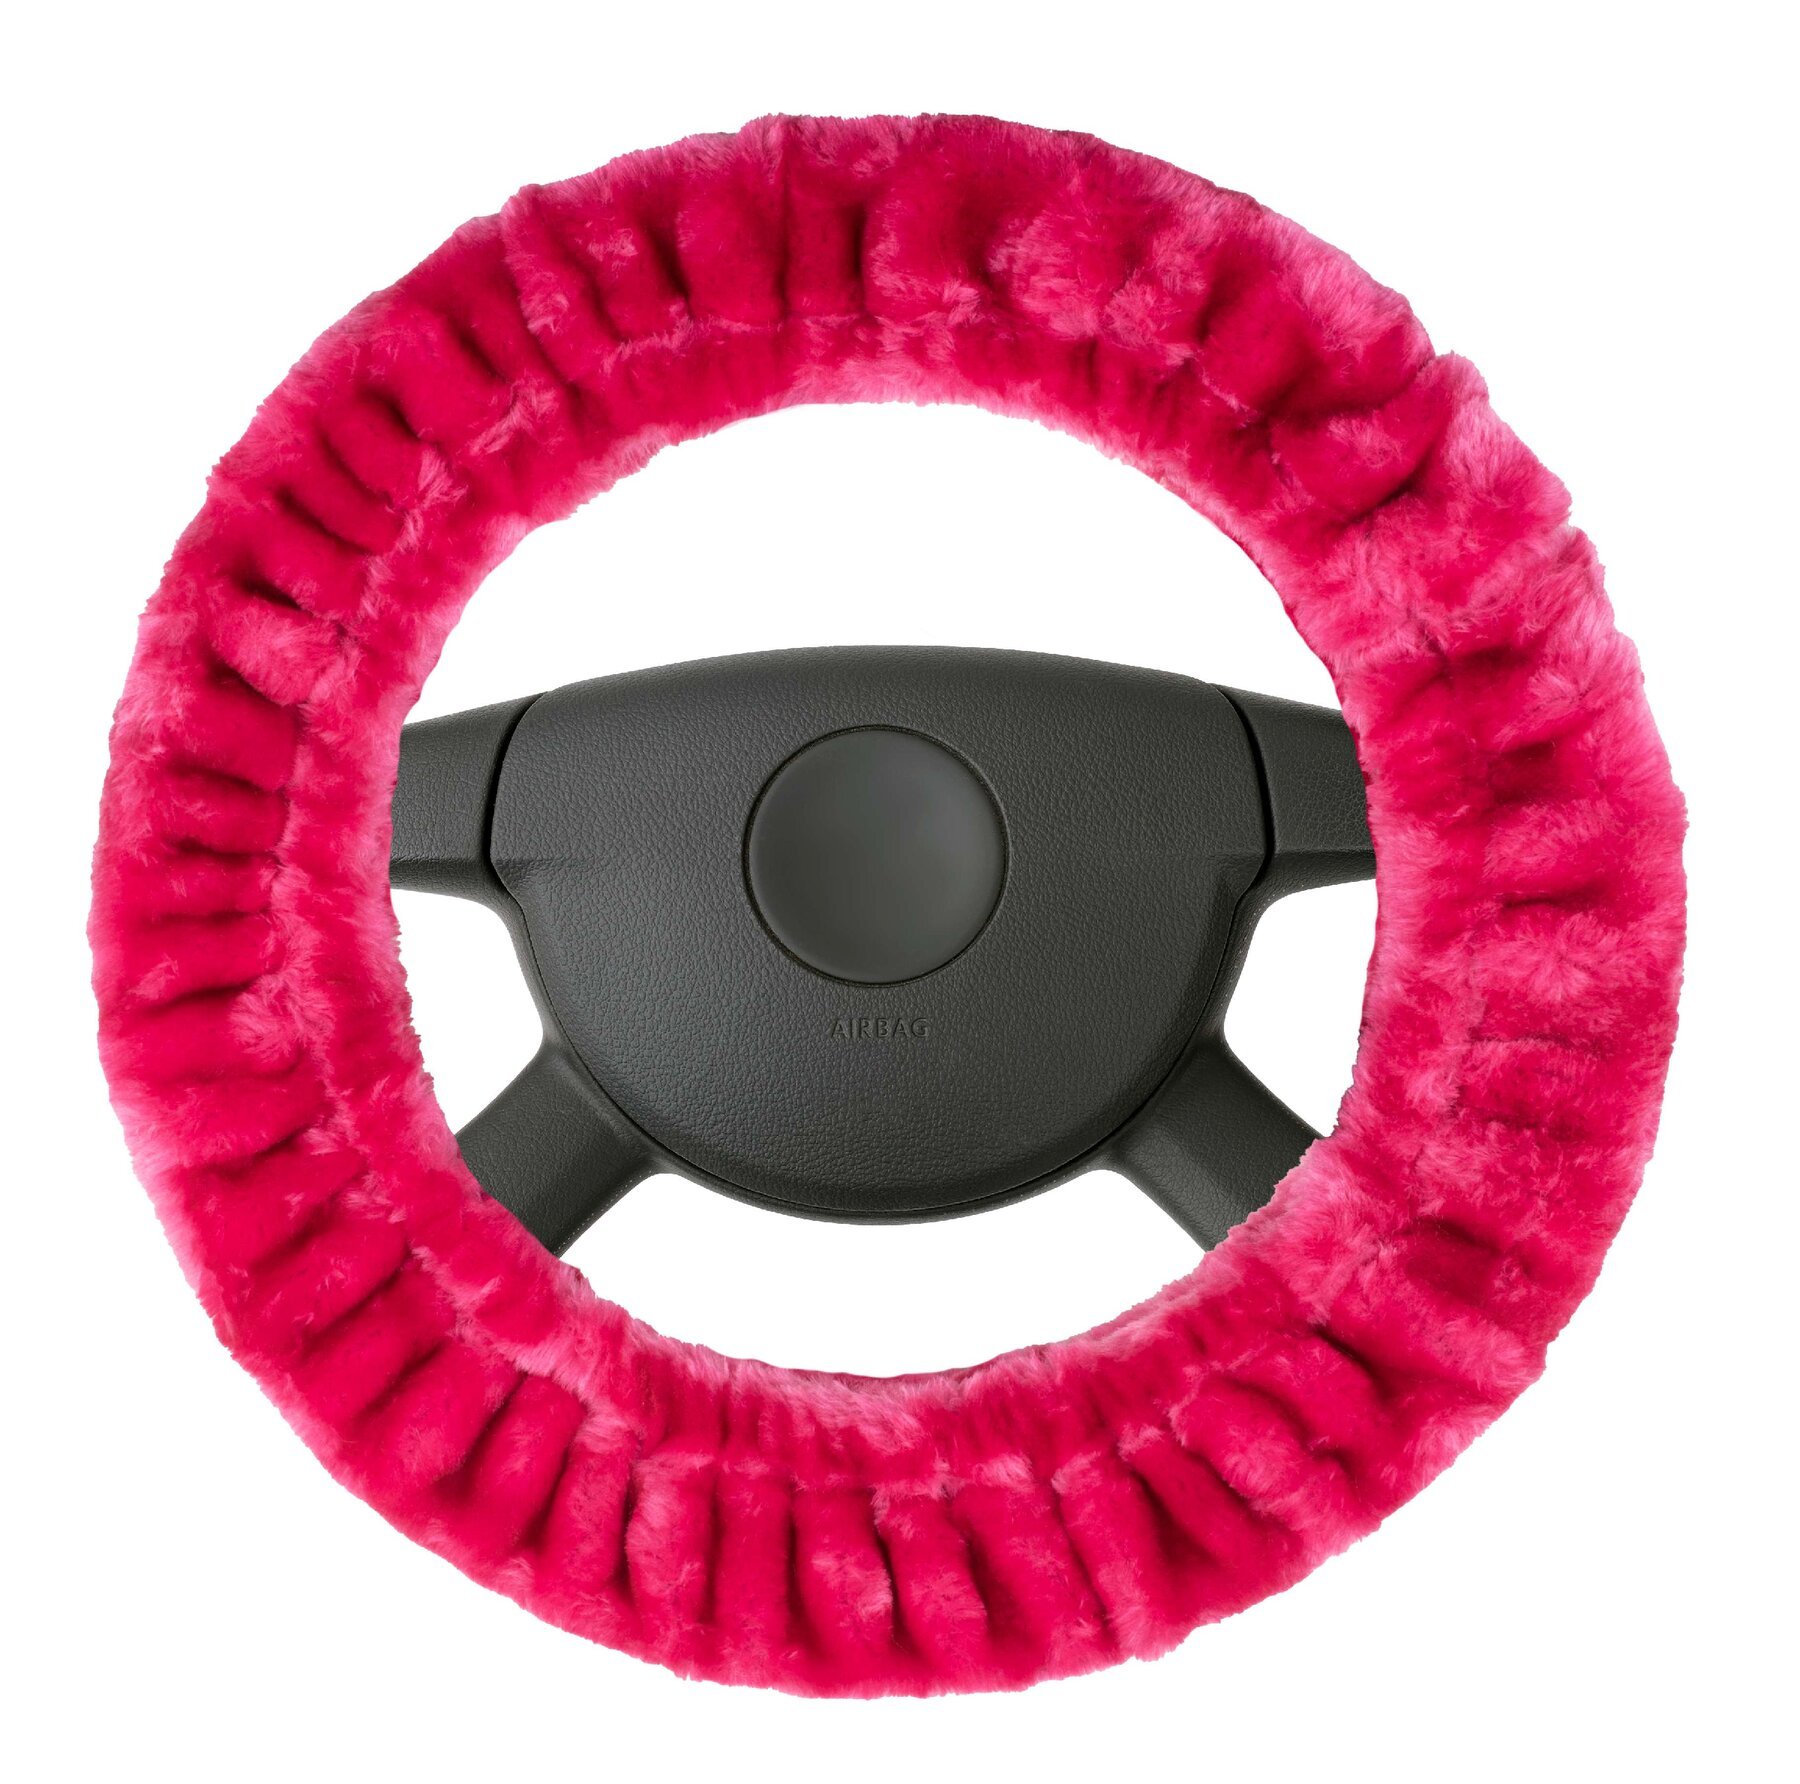 Steering wheel cover Teddy Plush faux fur vegan pink